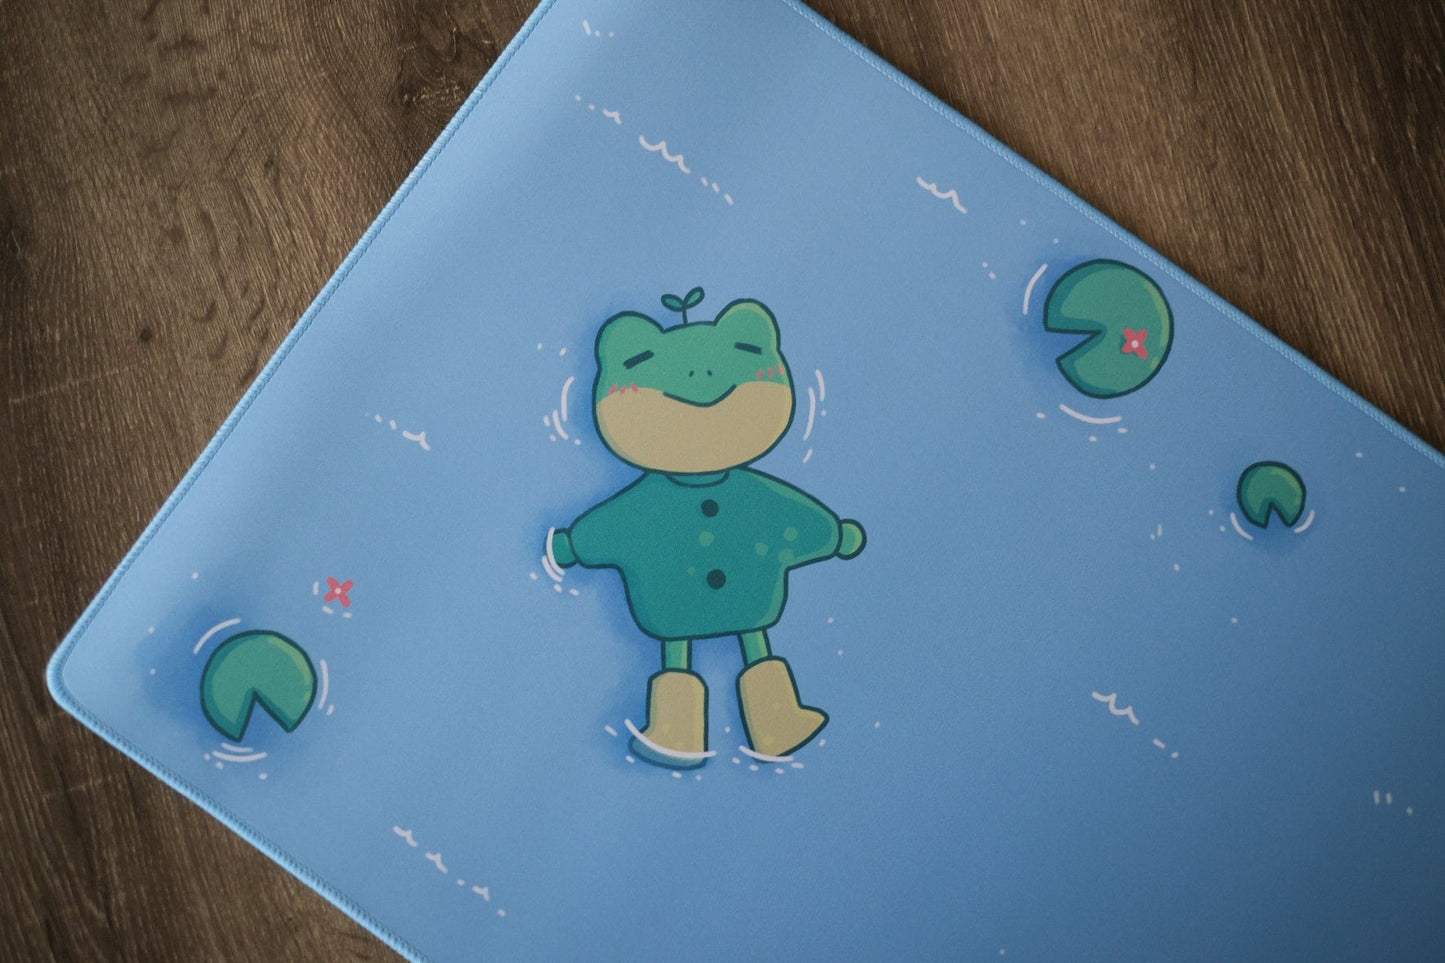 frogki [Group Buy] Froggy Deskmats